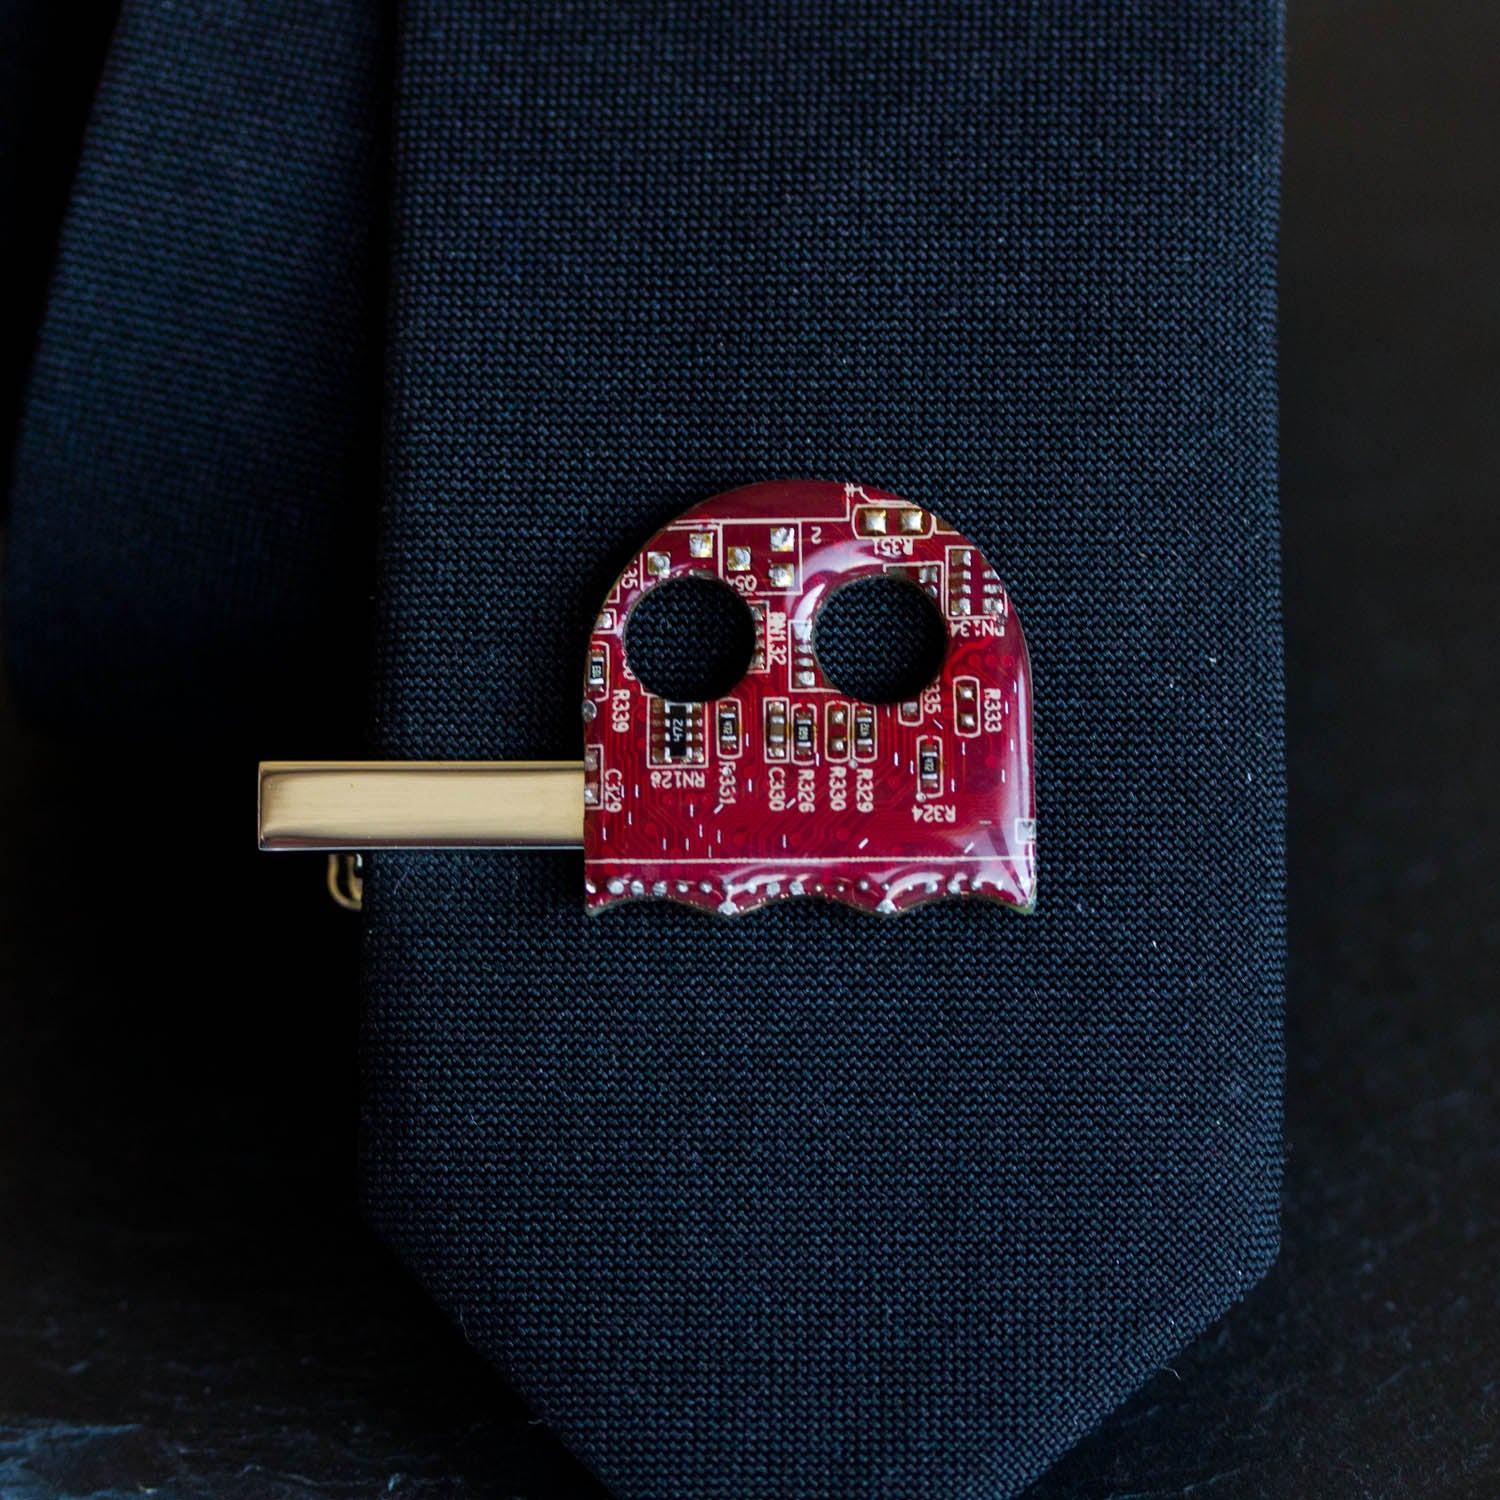 Pacman ghost inspired Circuit board Tie bar - geek mens gift, groomsmen tie clips, tie holder, gift for husband